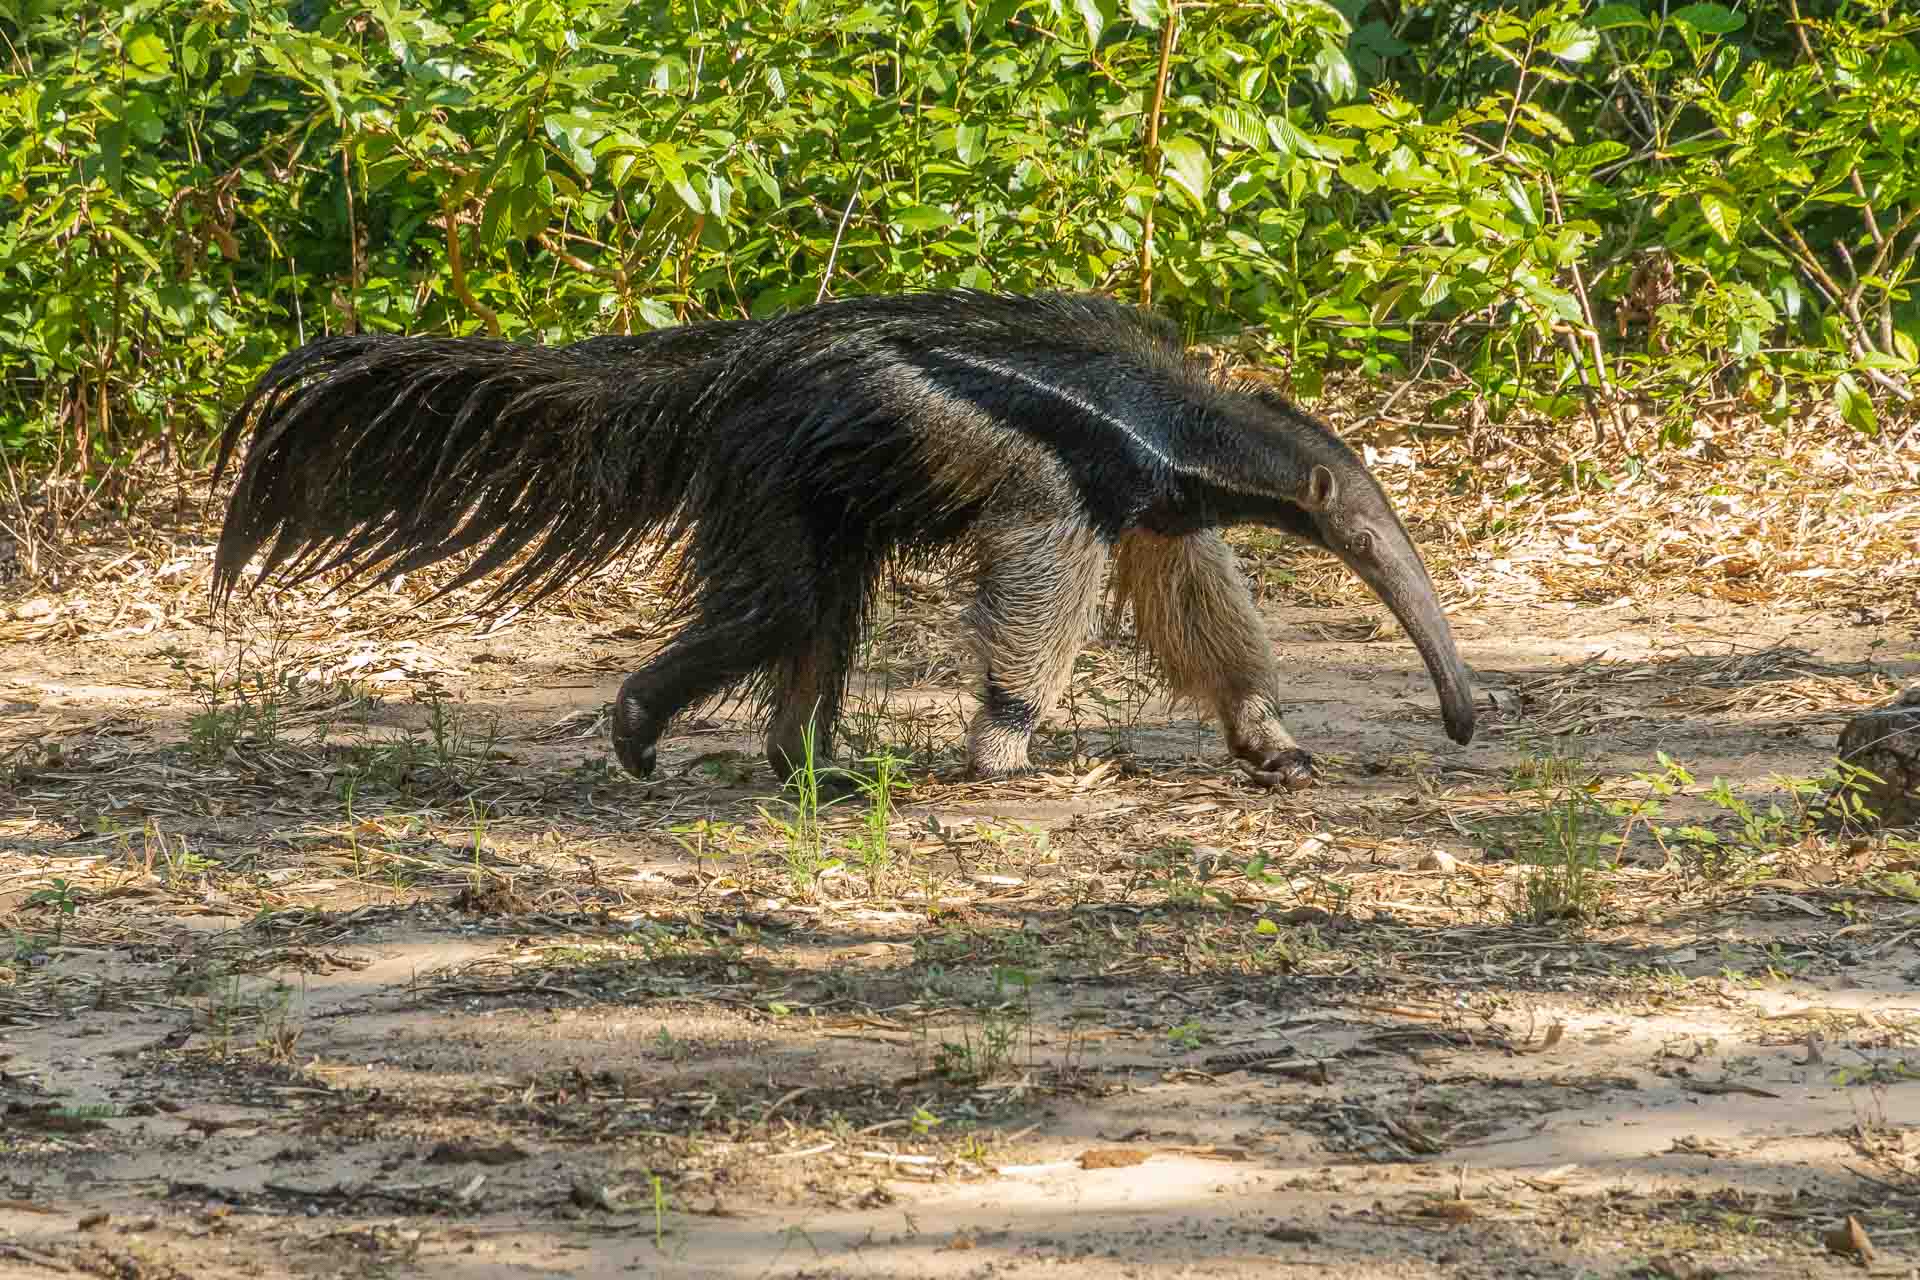 Visit Pantanal - Pantanal Sul e Serra da Bodoquena